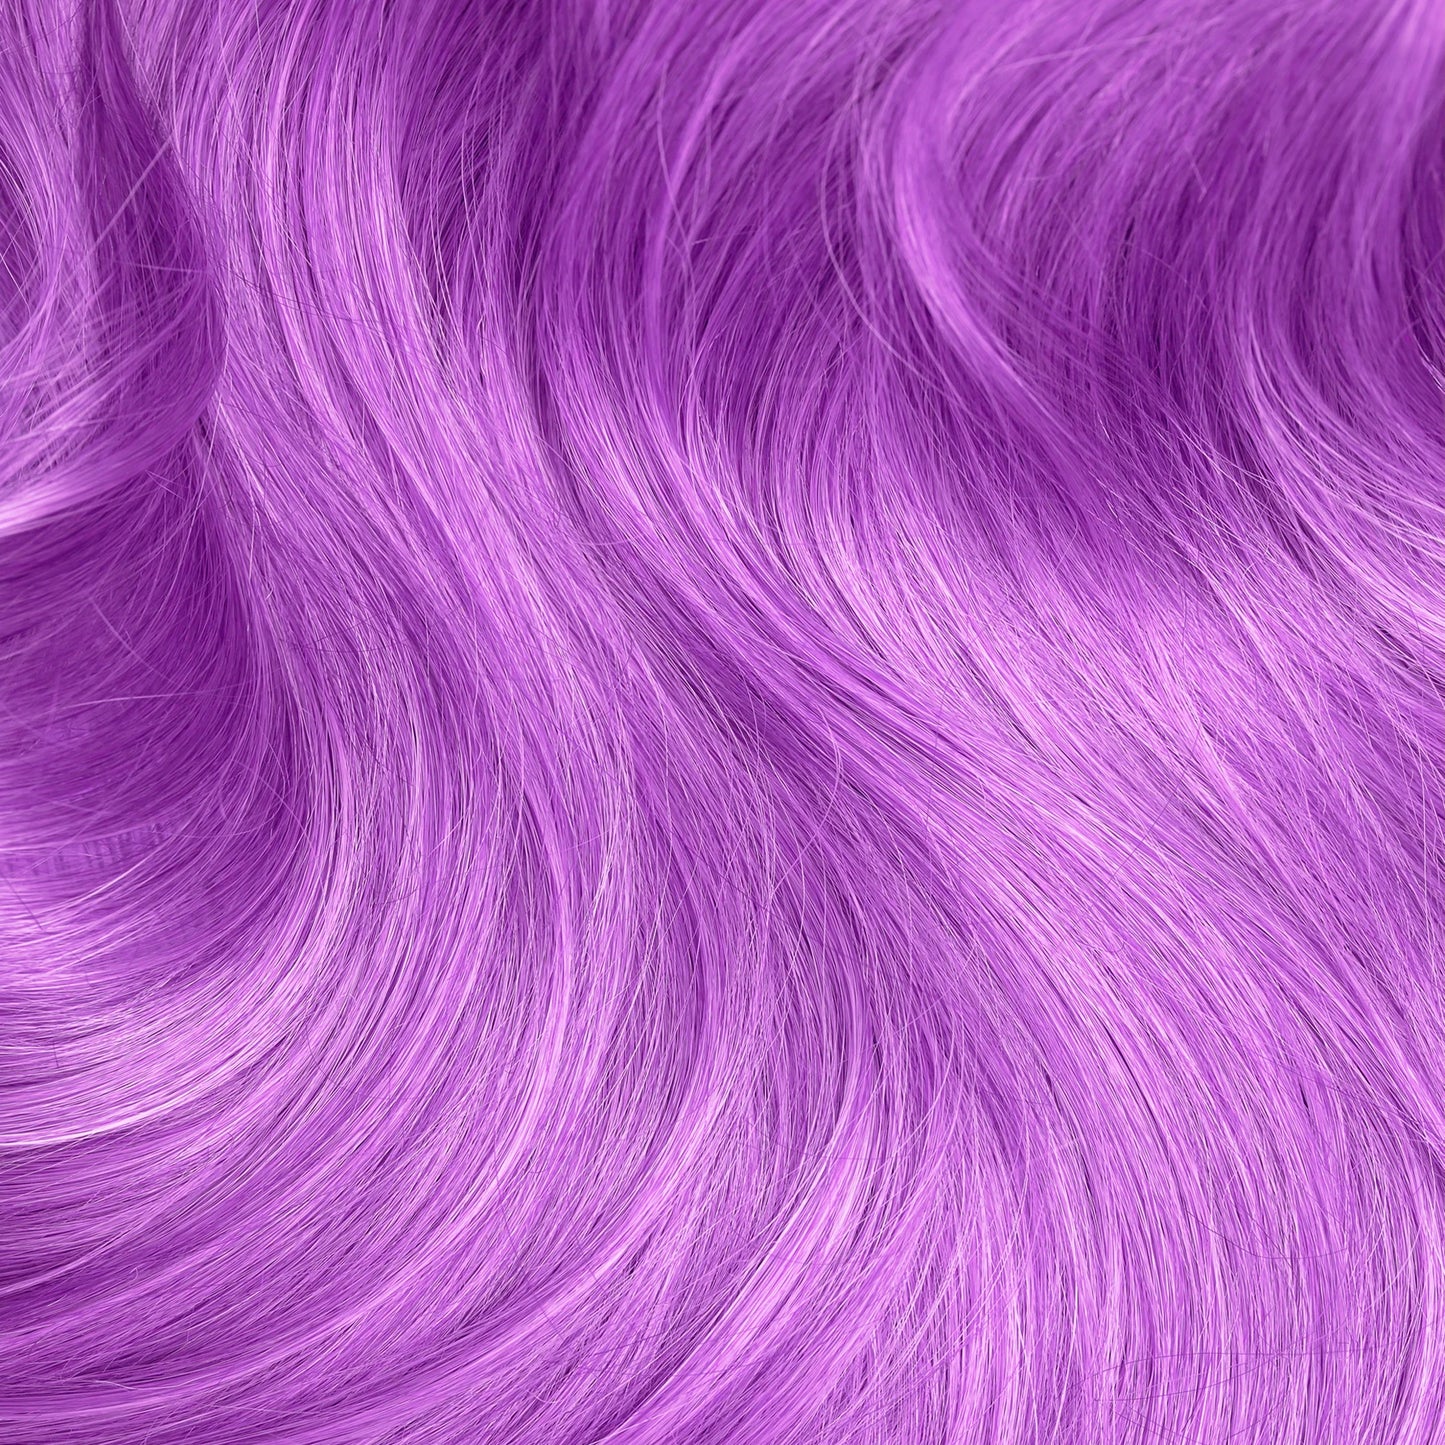 AMETHYST PASTEL PURPLE Lunar Tides hair dye